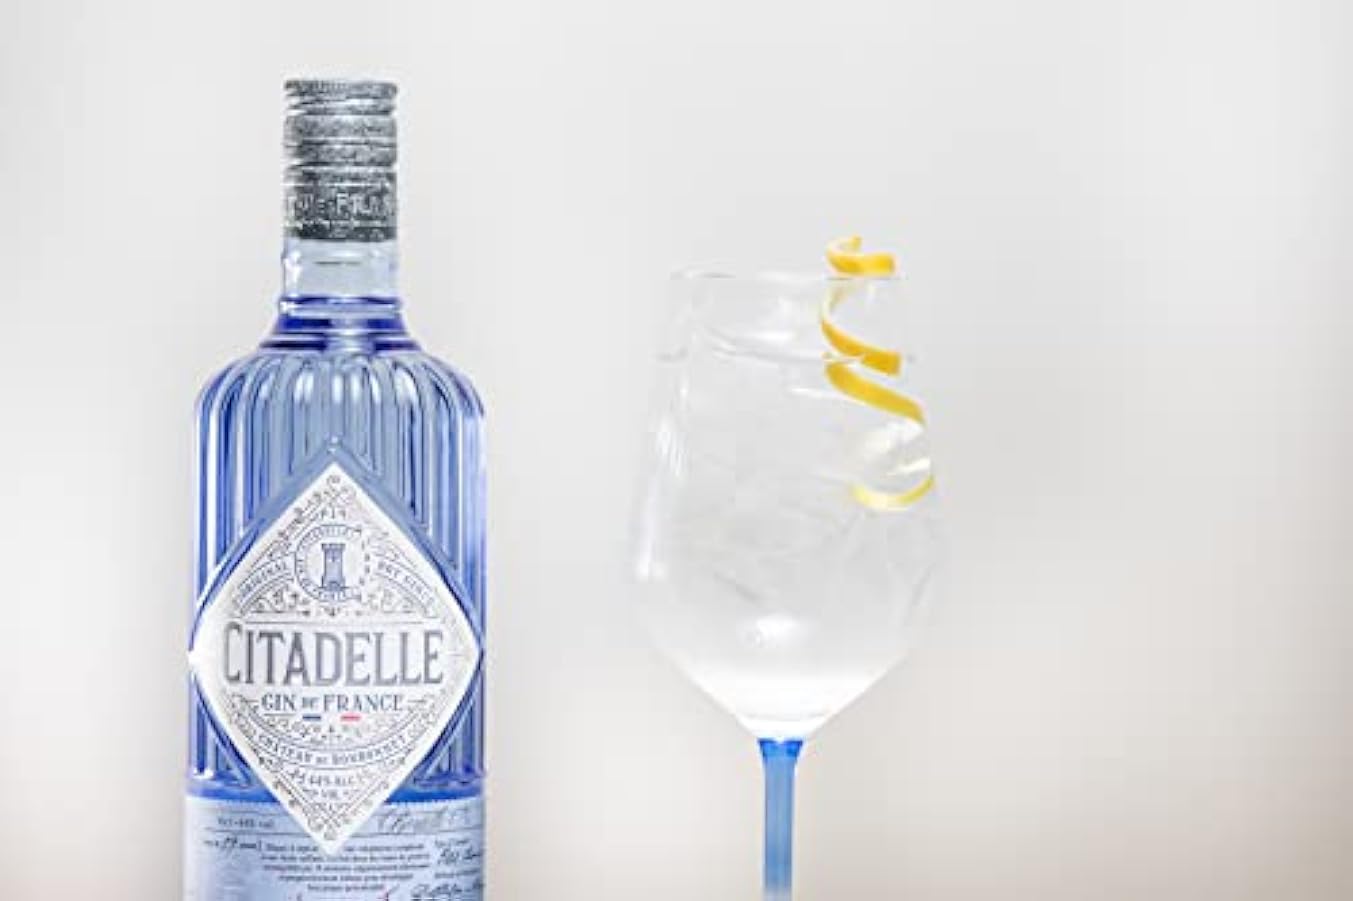 Citadelle Gin + bicchiere 0,7L (44% Vol.) 22211406